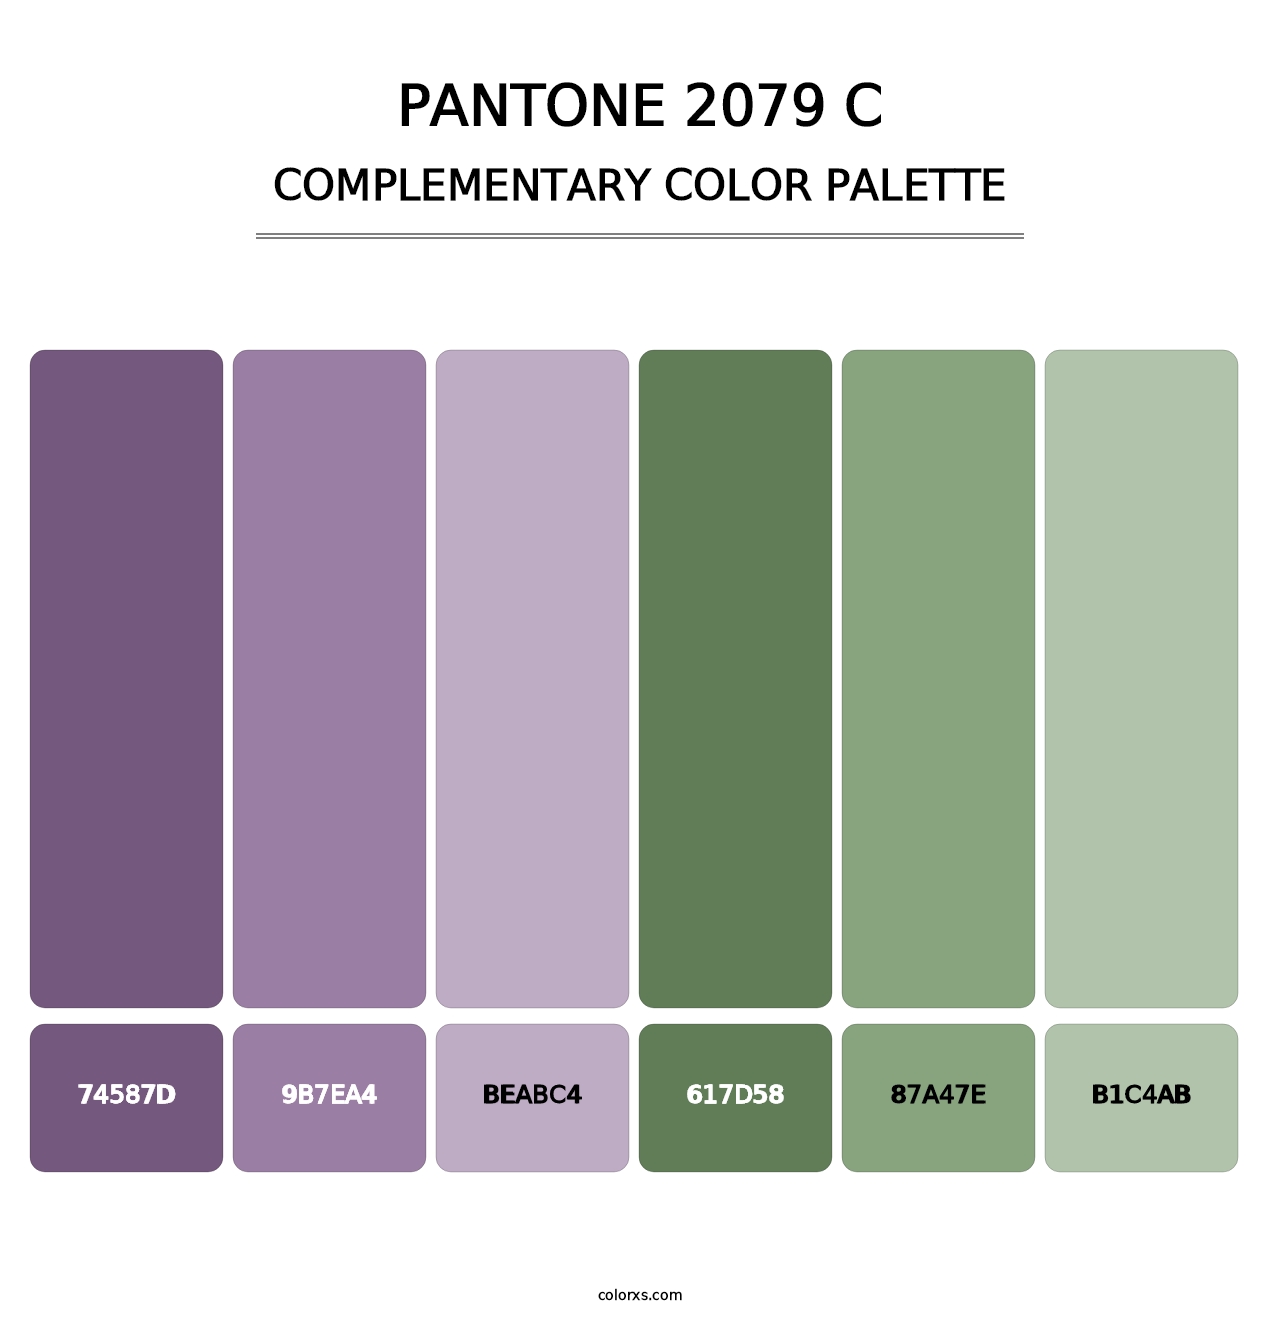 PANTONE 2079 C - Complementary Color Palette